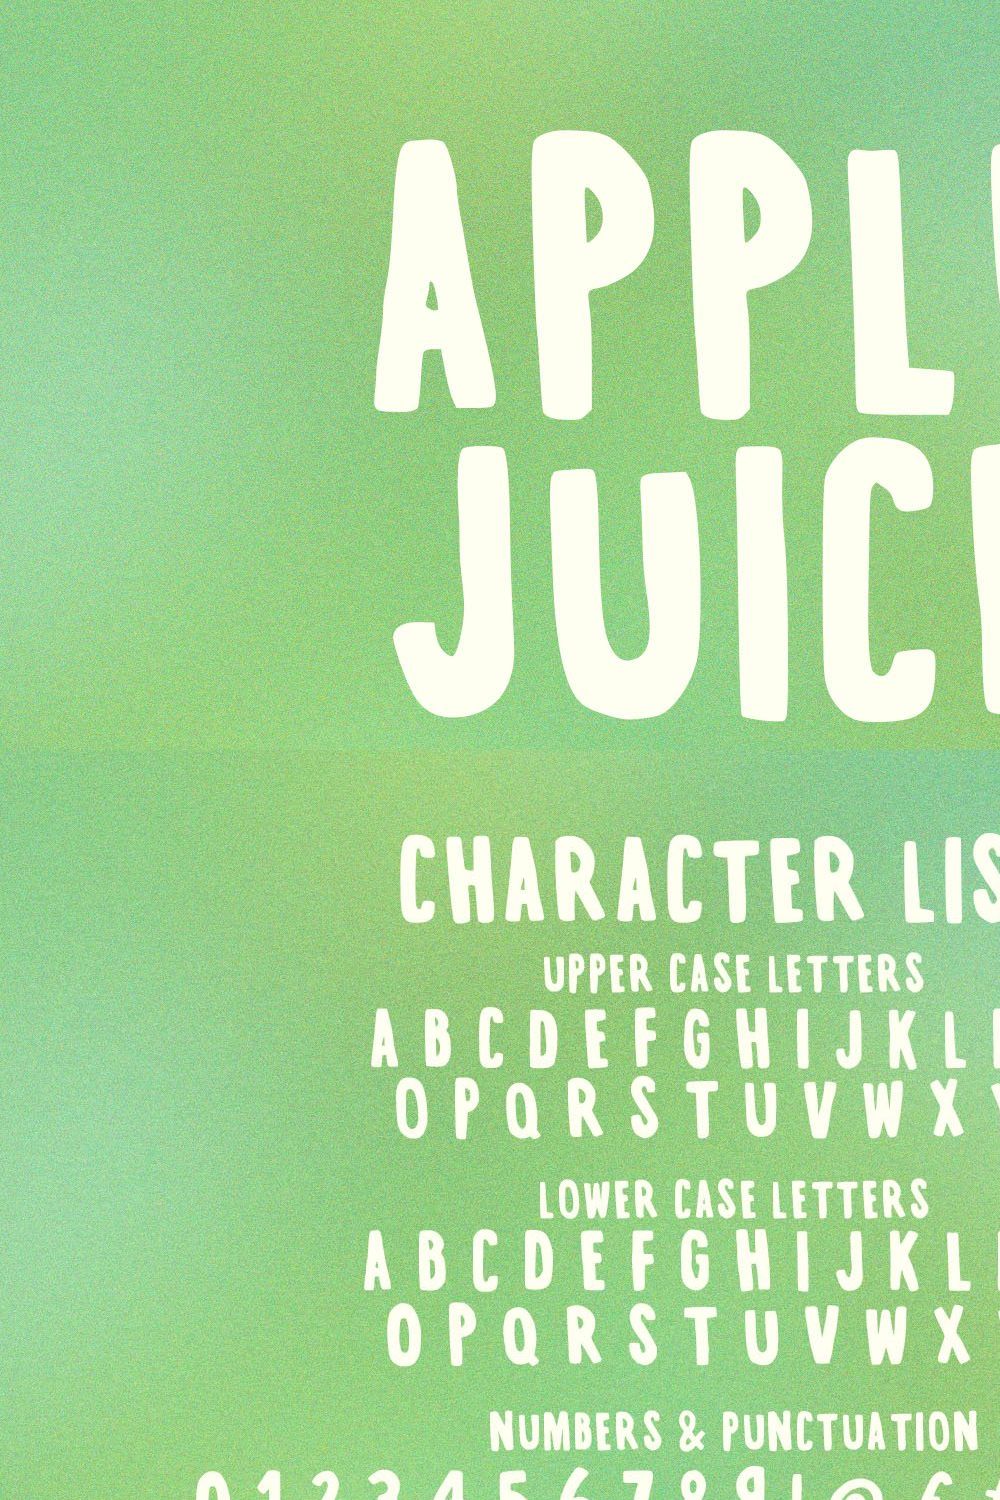 Apple Juice - Imperfect Font pinterest preview image.